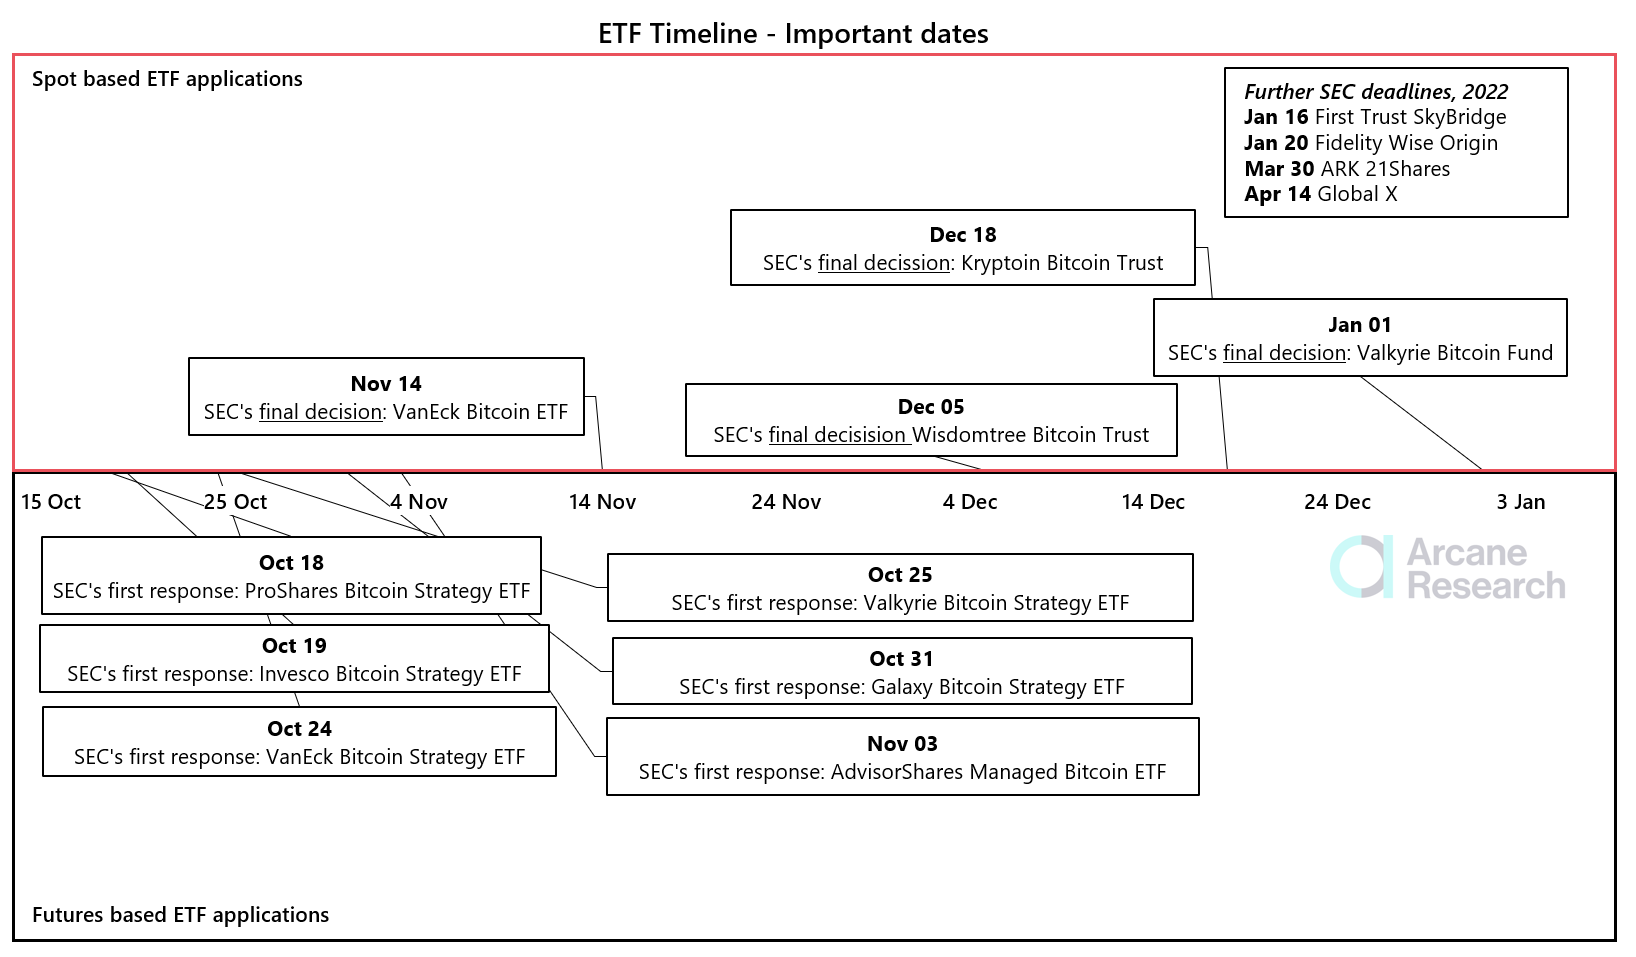 ETF Timeline - Important Dates